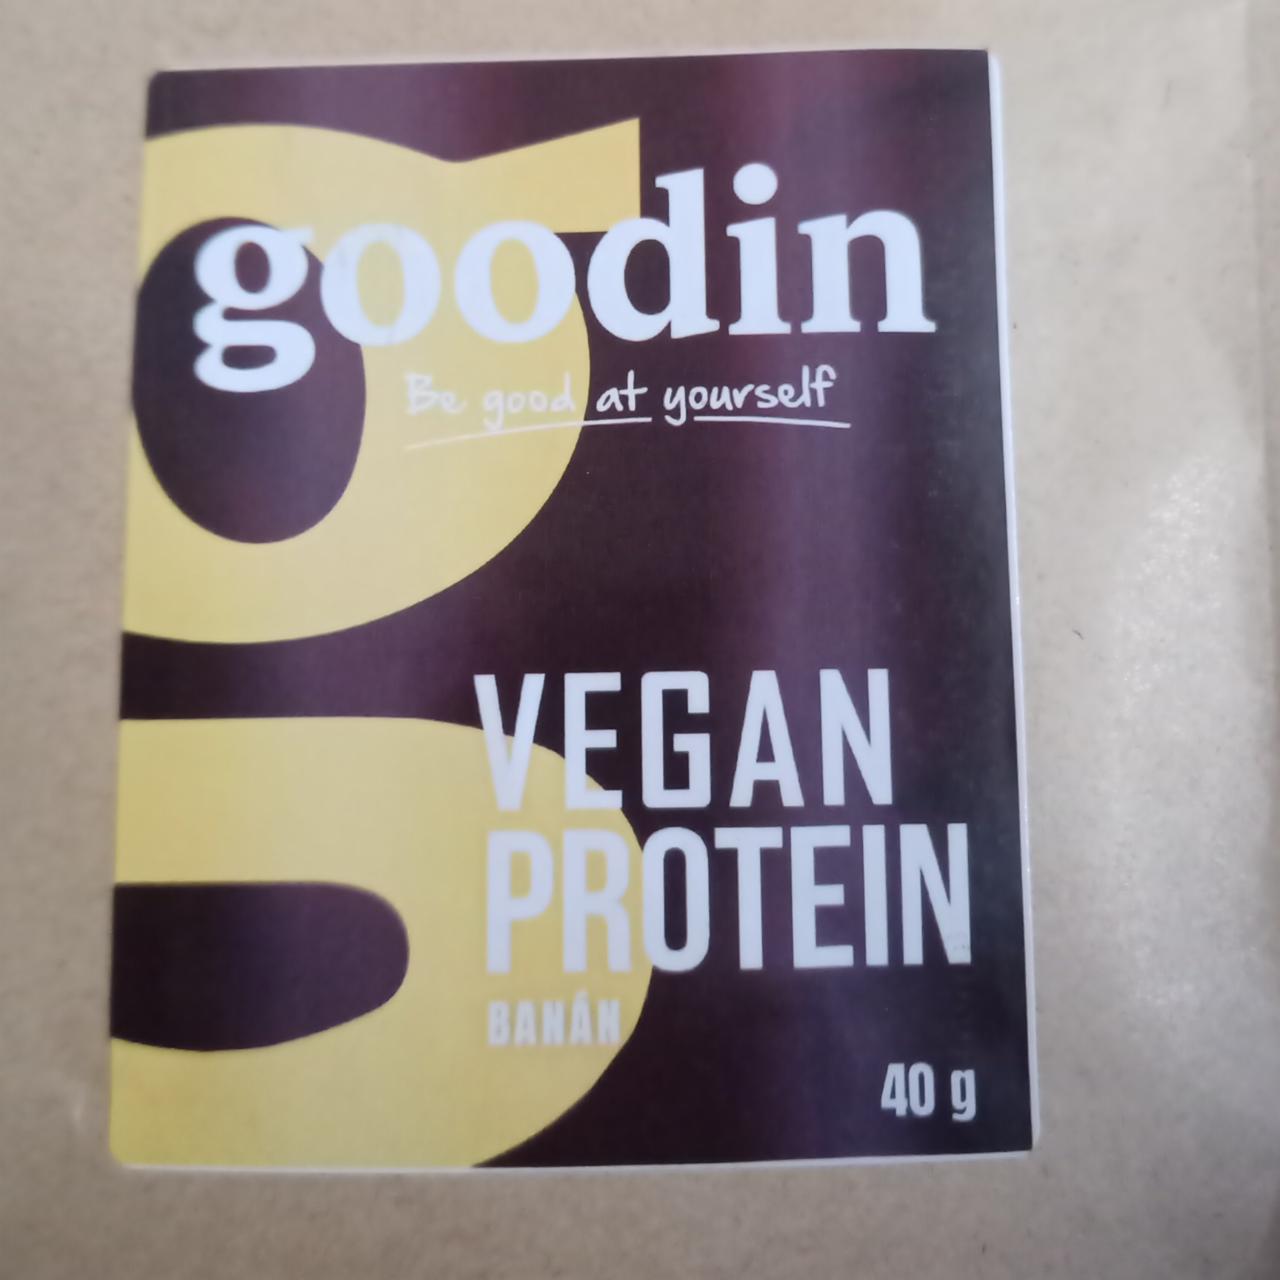 Fotografie - Vegan protein banán Goodin